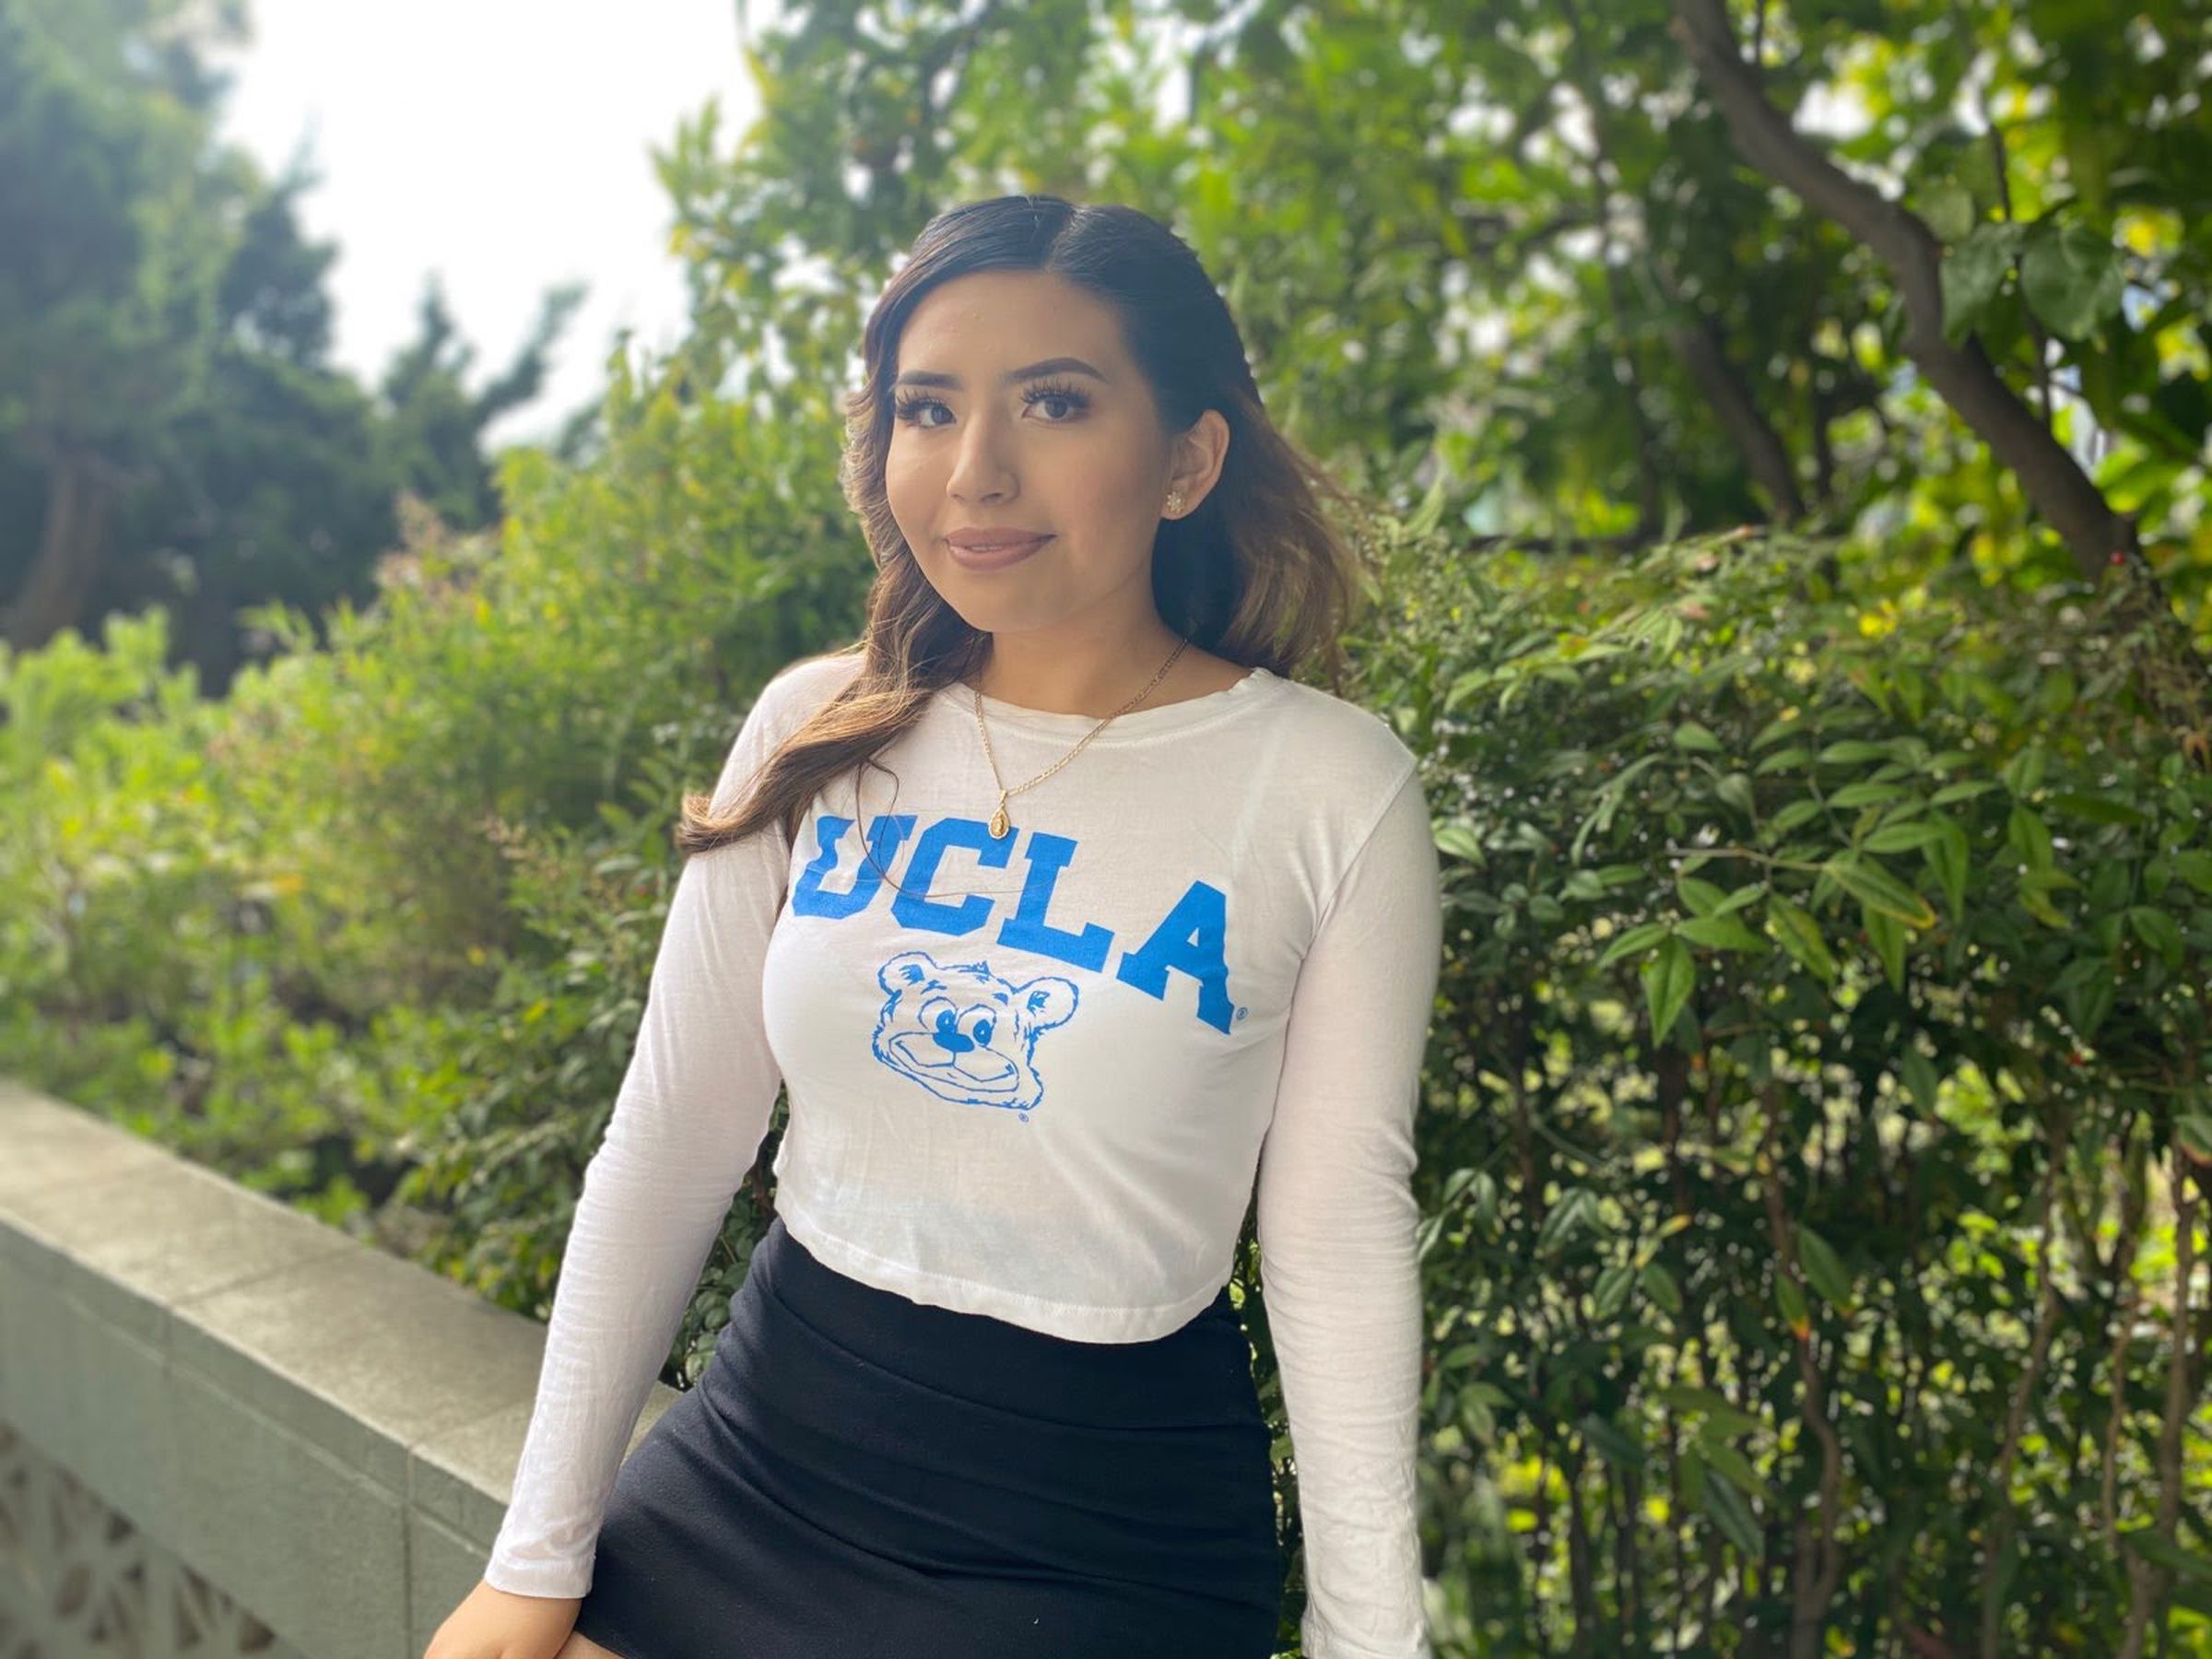 Elizabeth Padilla Ortiz is an incoming sophomore studying nursing at UCLA